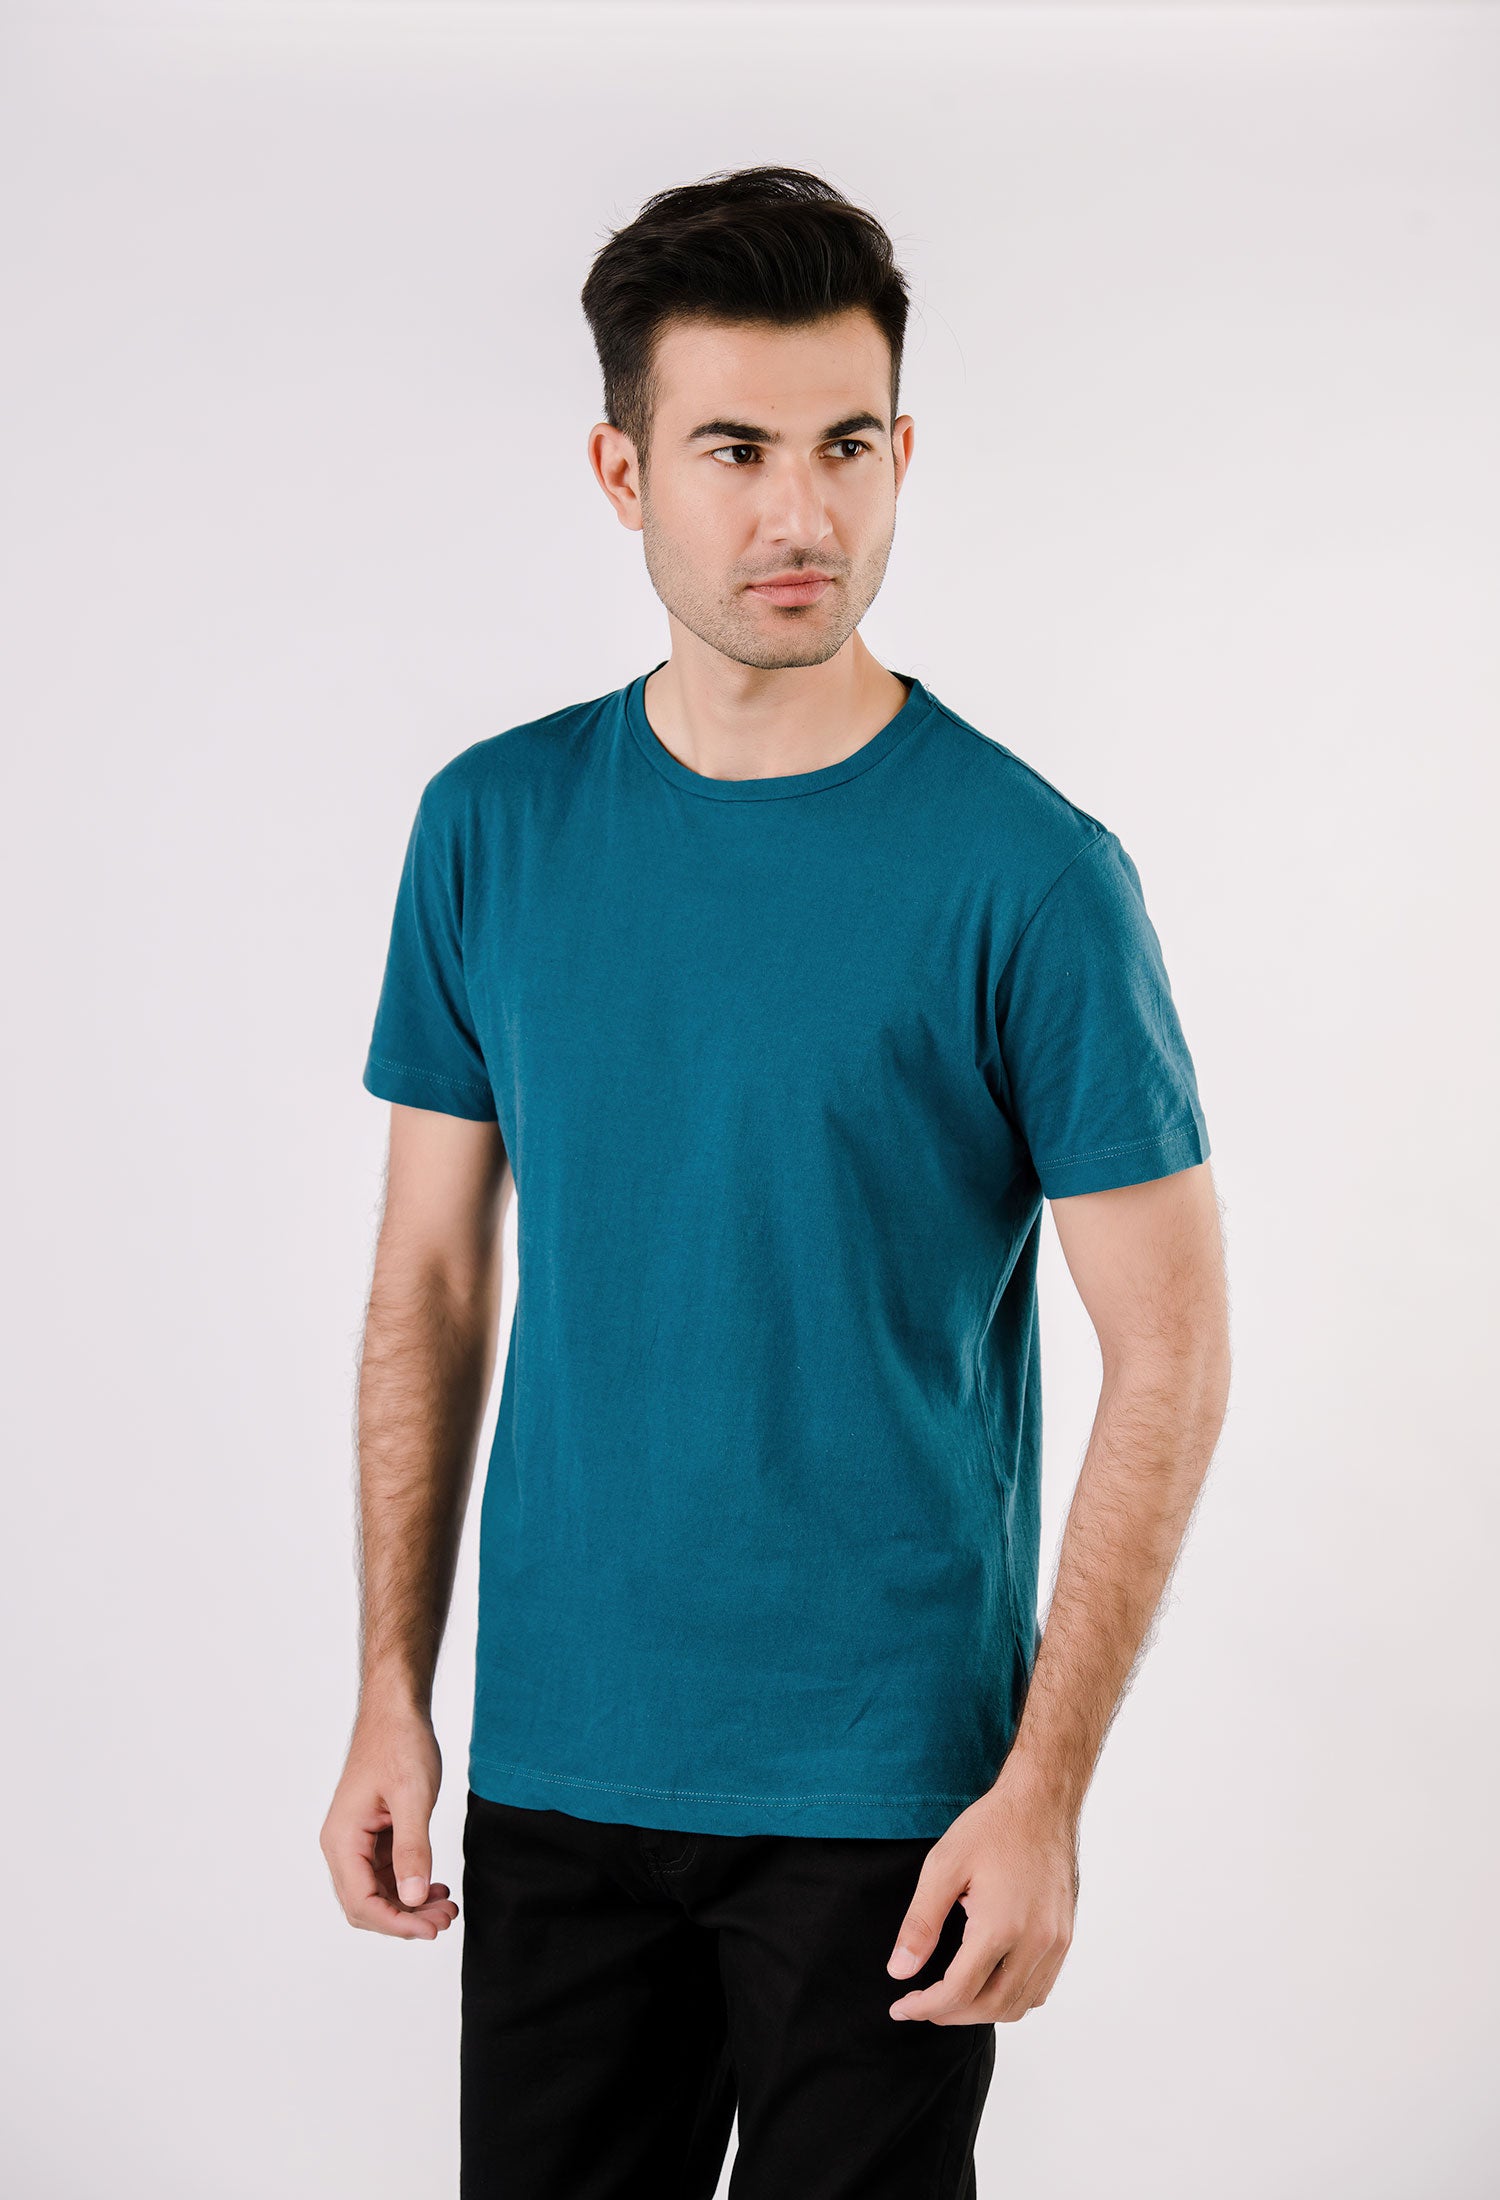 Teal Blue Basic T-Shirt